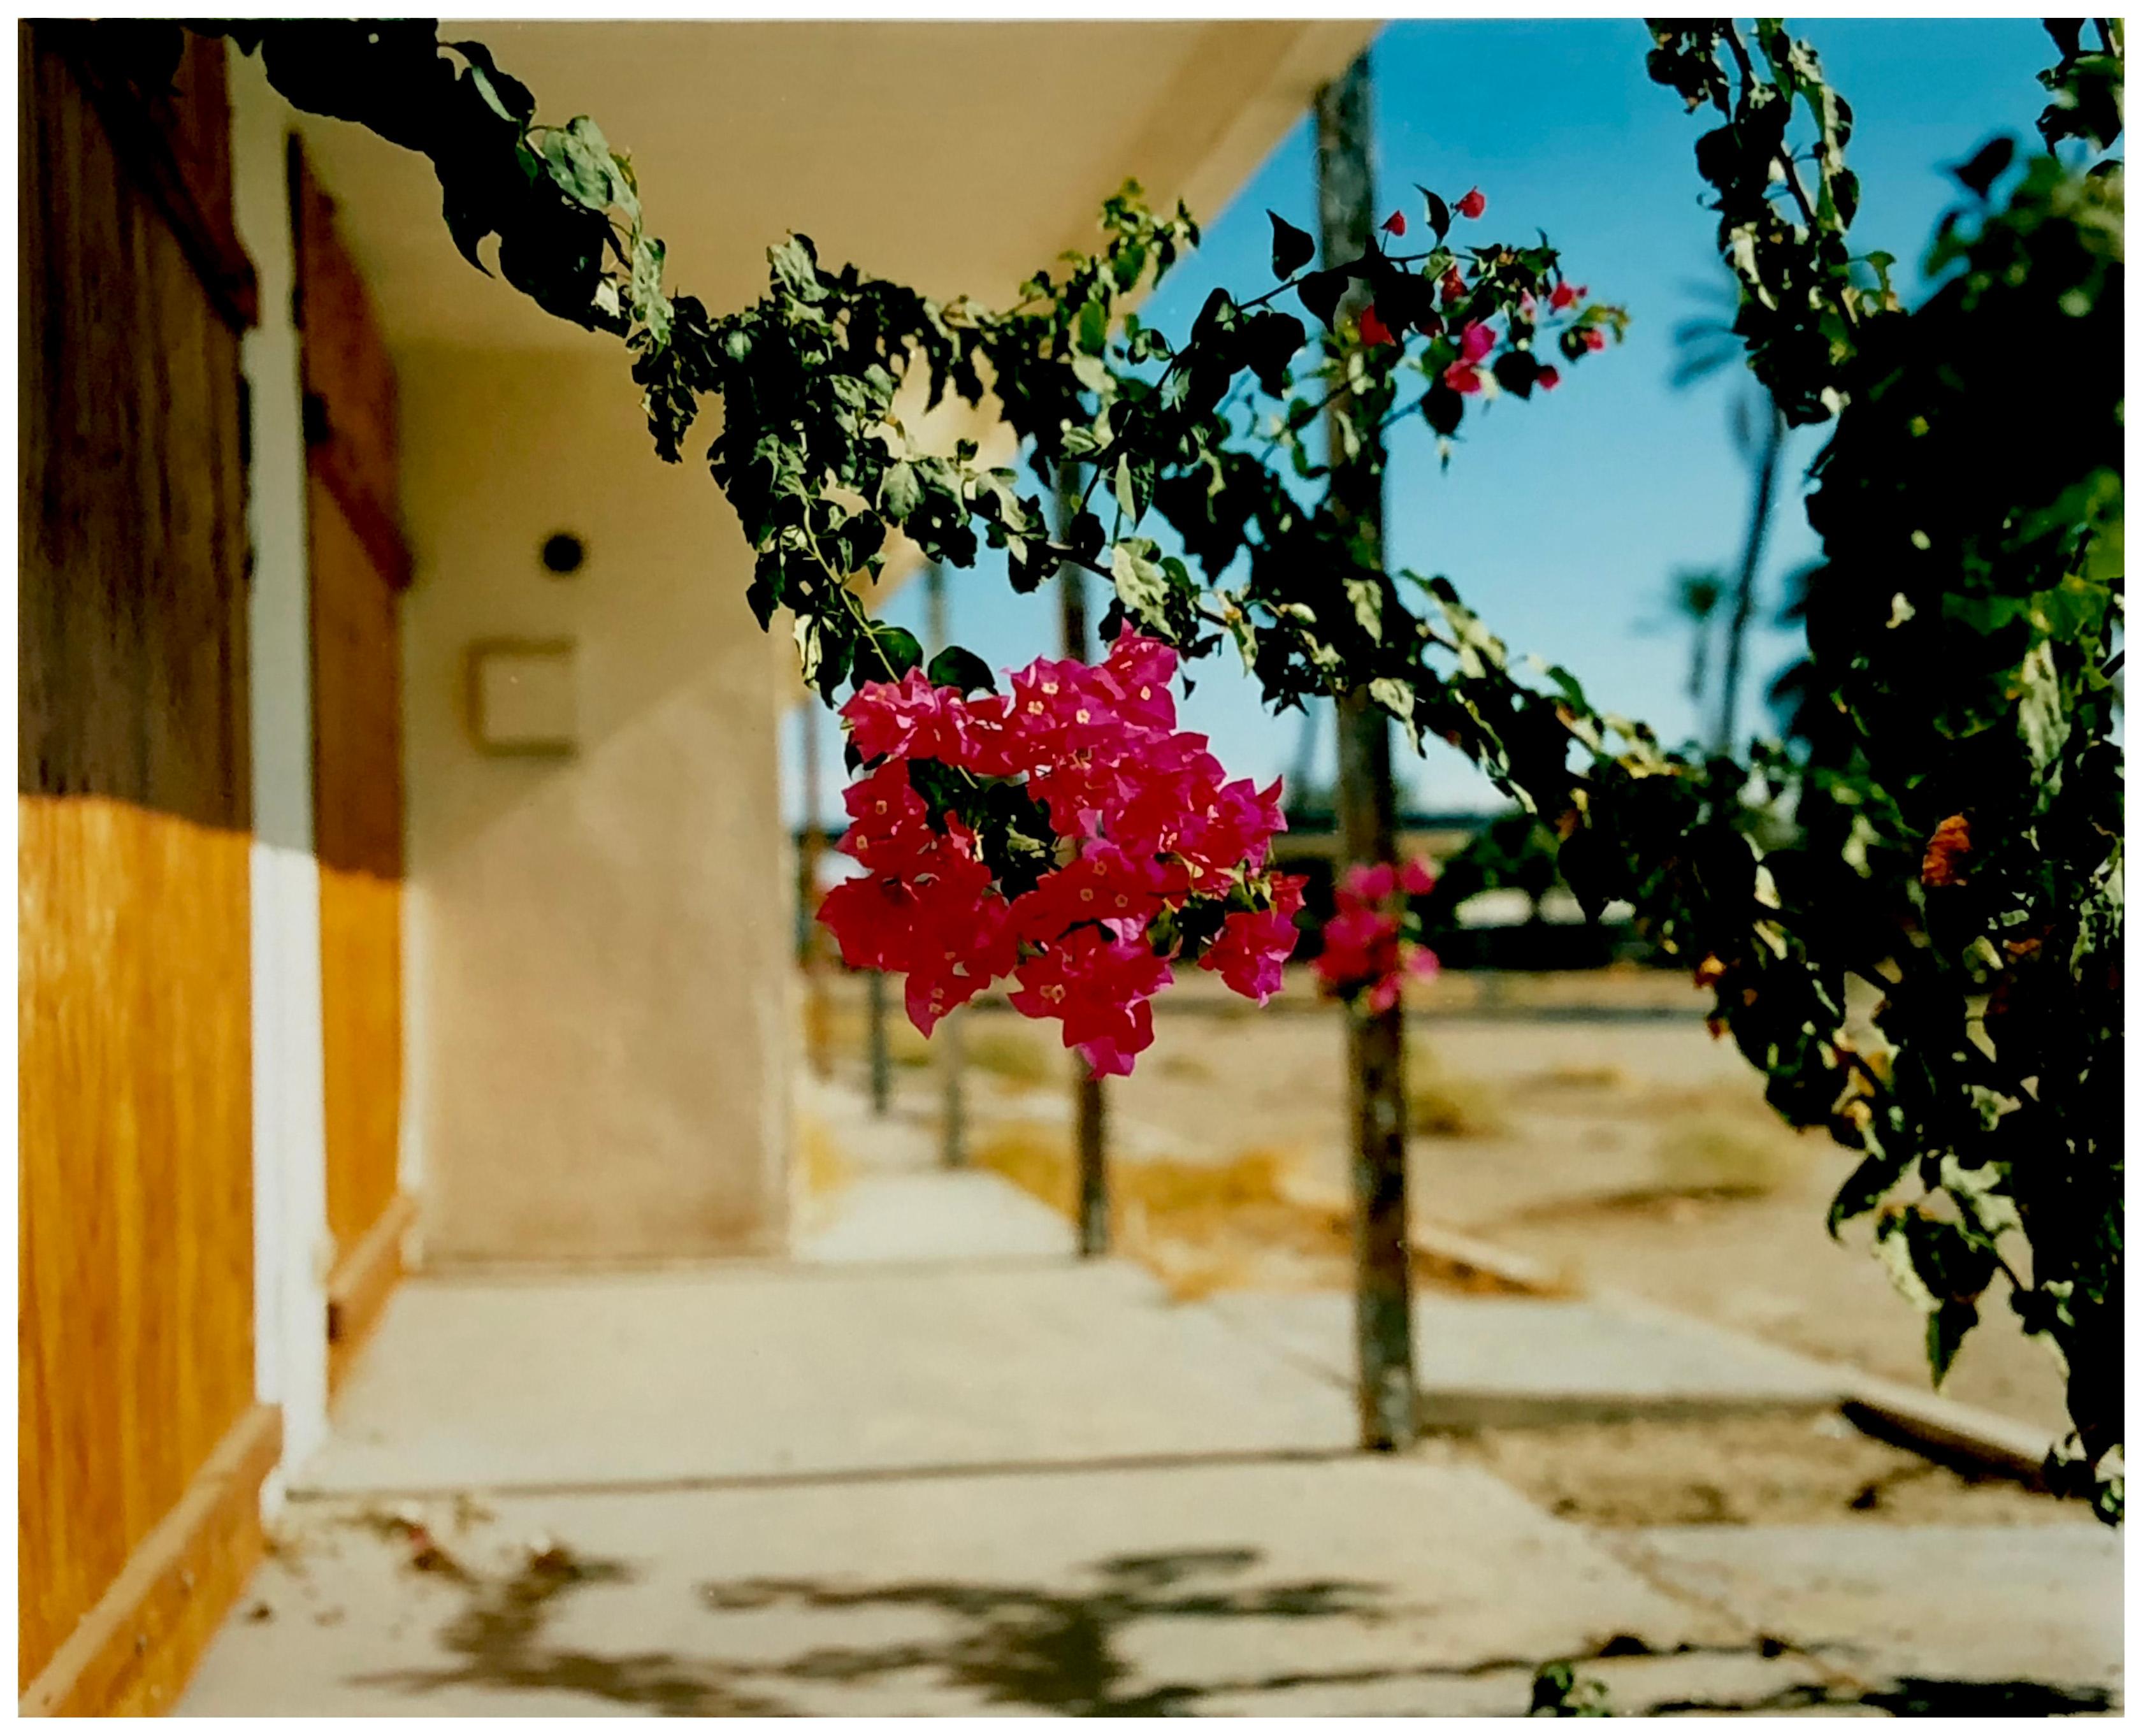 Richard Heeps Color Photograph - Bougainvillea, North Shore Motel, Salton Sea, California - Floral Photograph